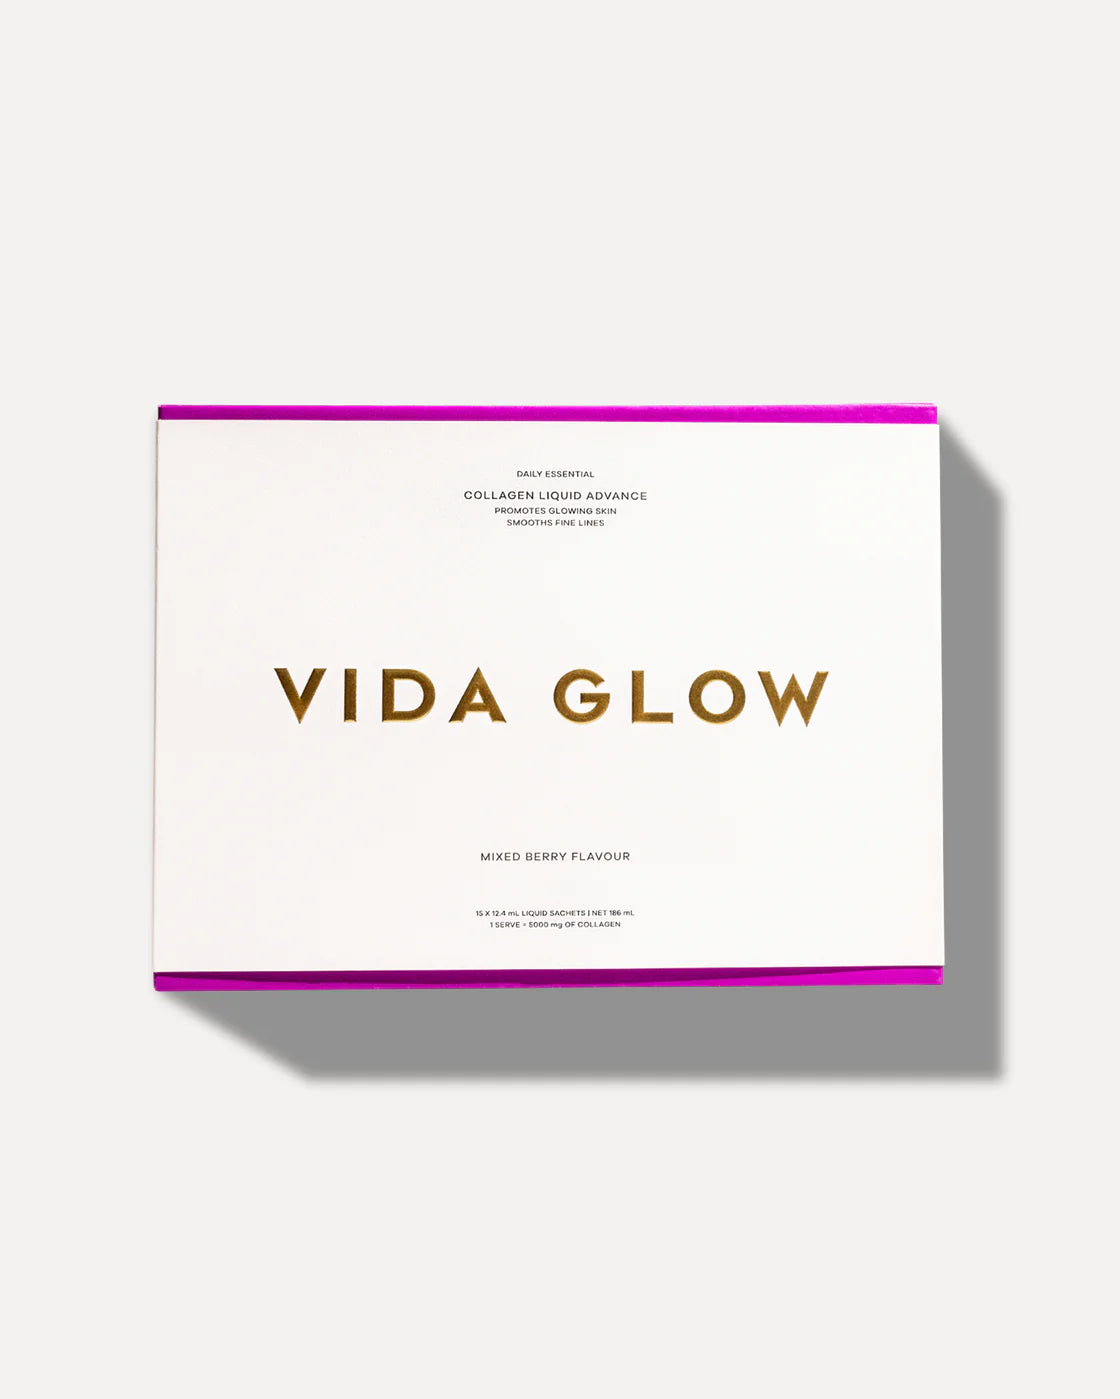 Vida Glow Collagen Liquid Advance 15x12.4ml